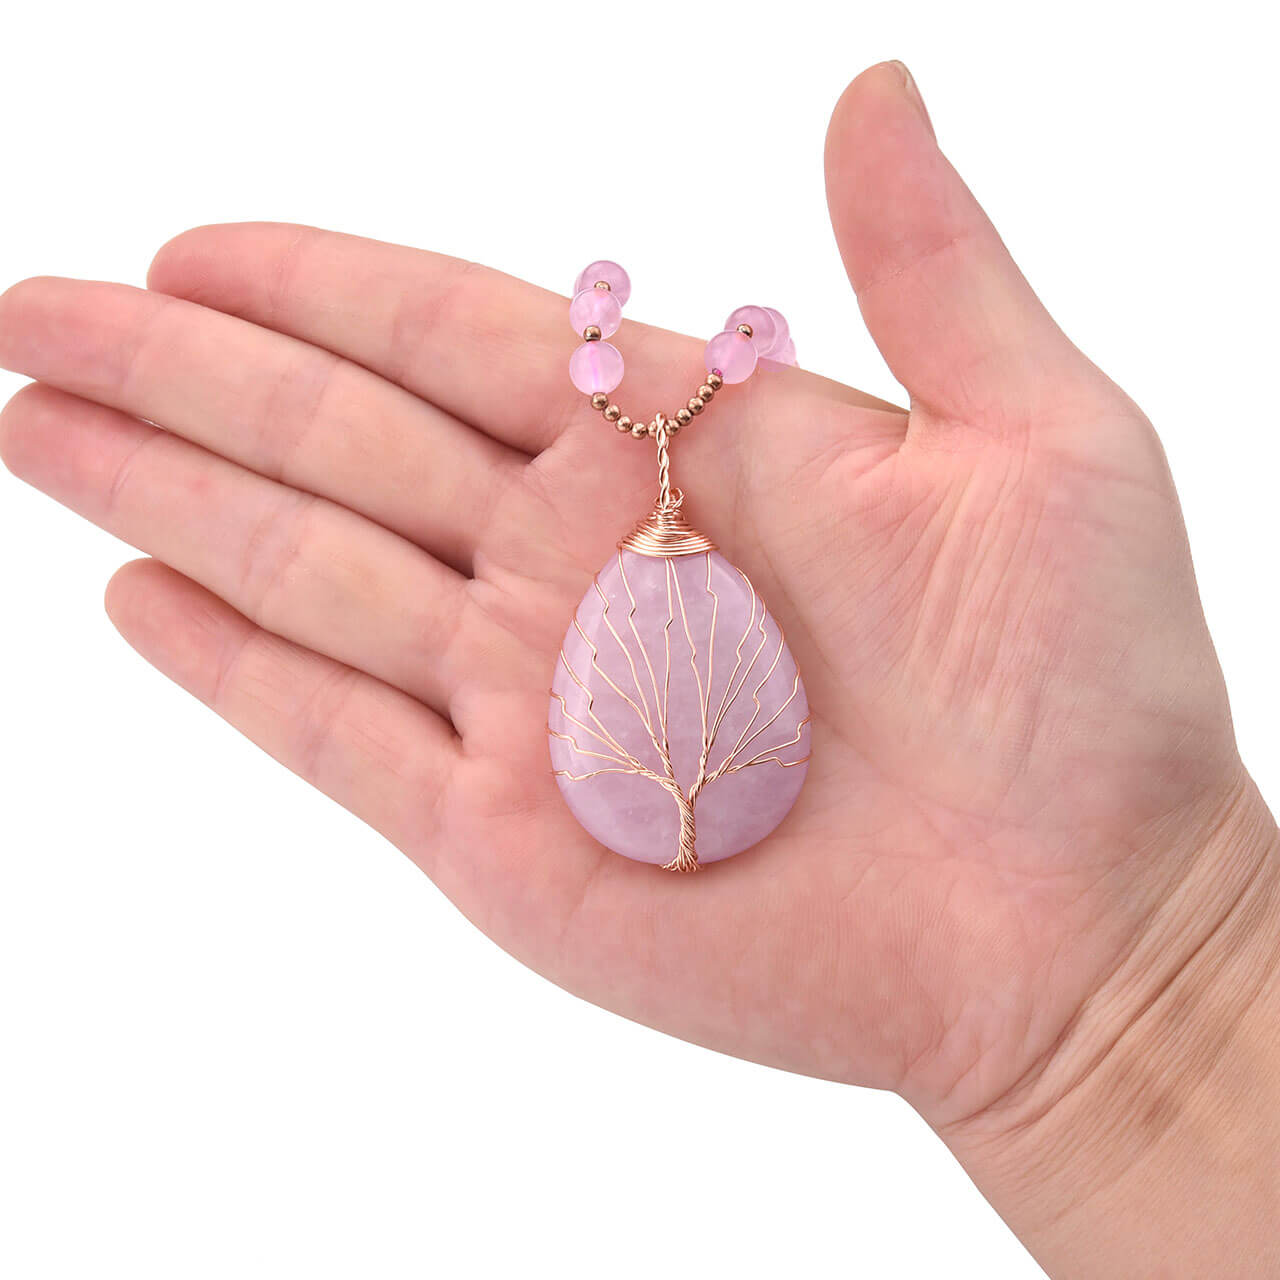 jovivi natural rose quartz teardrop copper wires wrapped tree of life pendant necklace, jjn071402